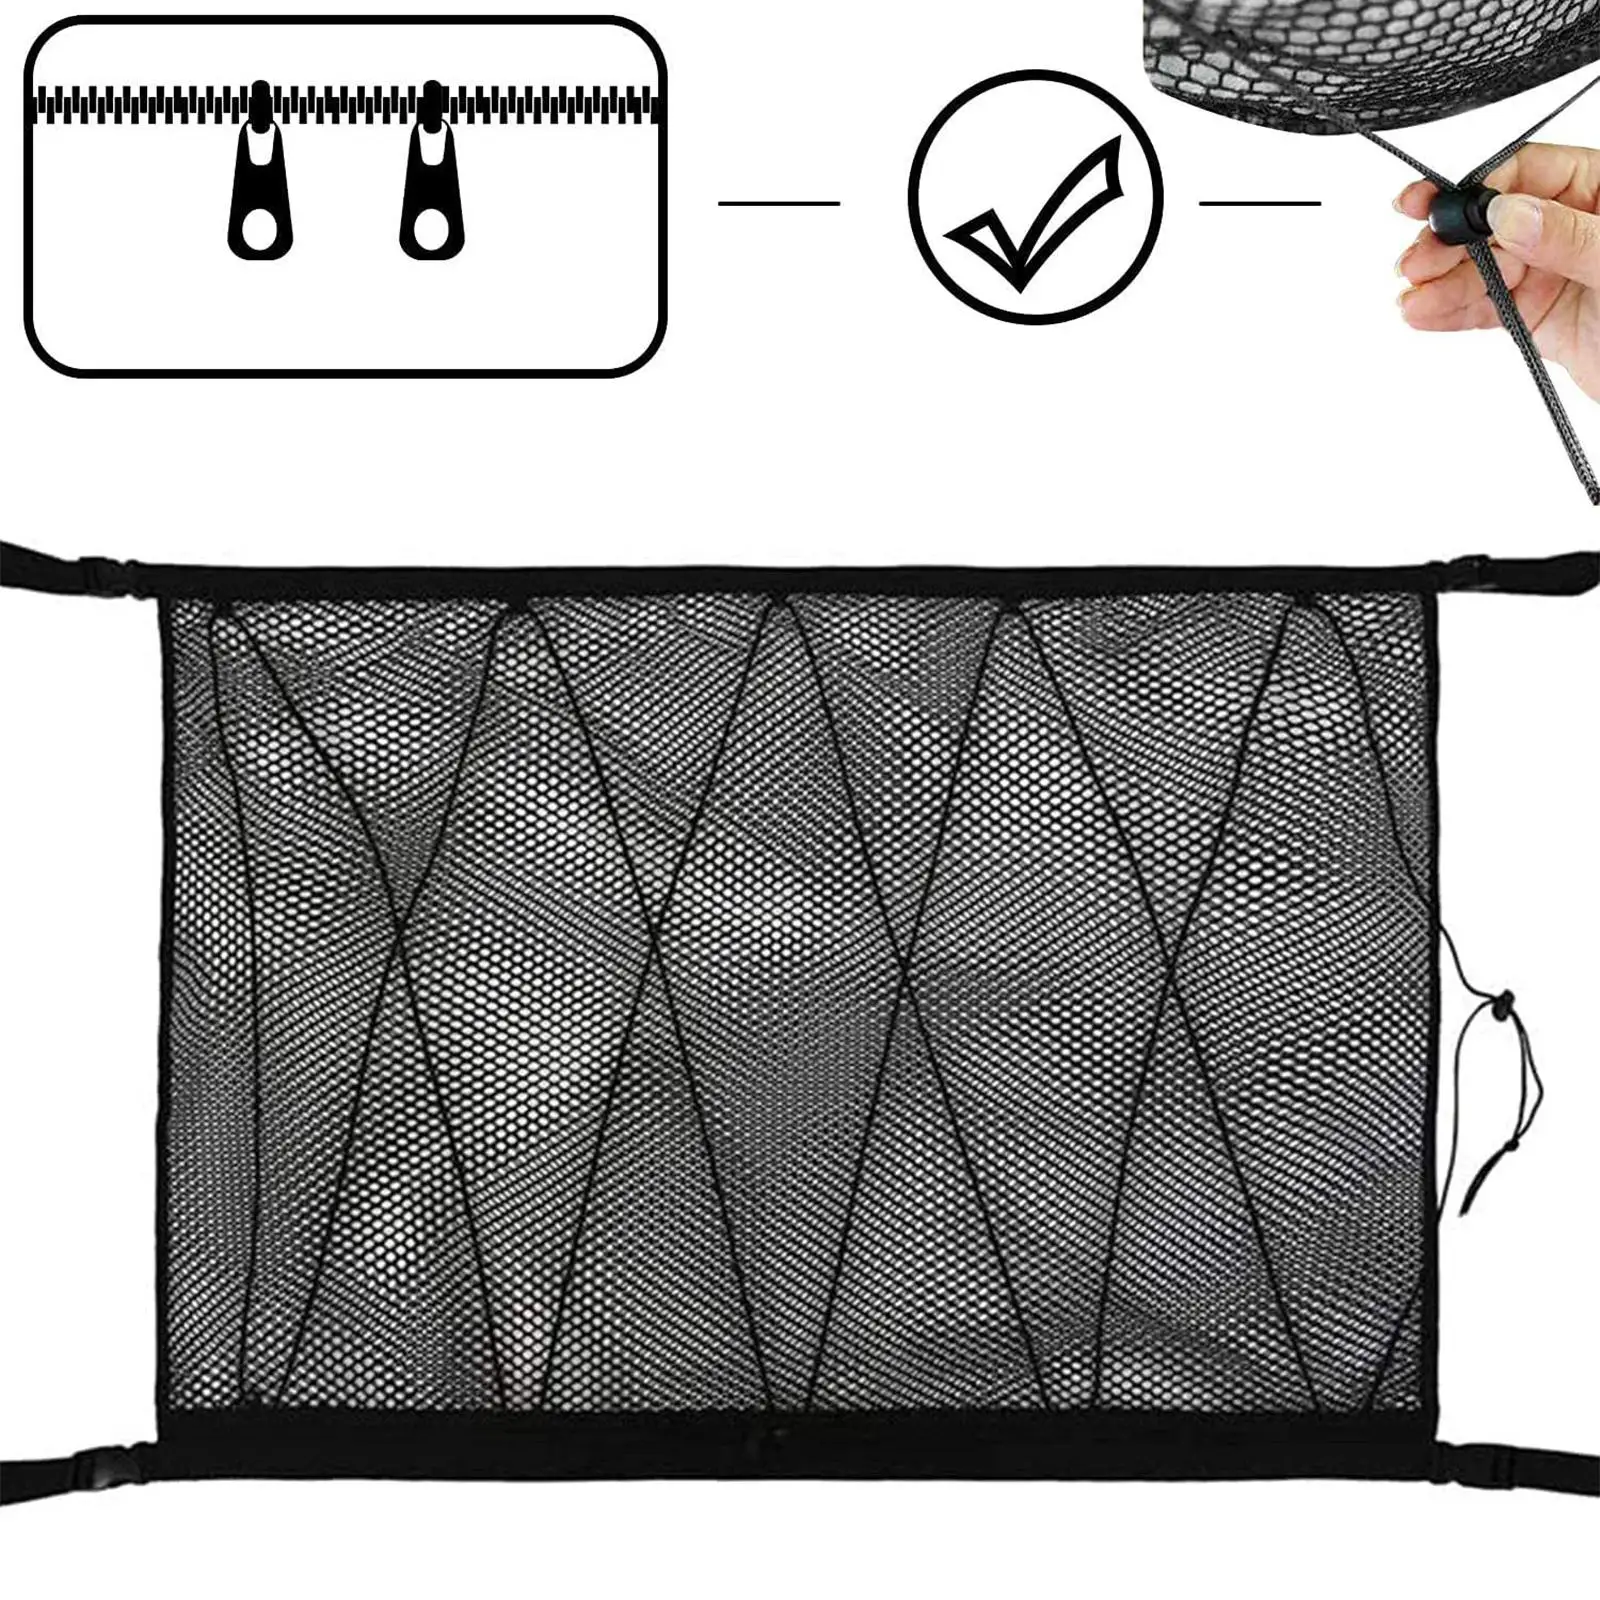 Truck Car Ceiling Cargo Pocket Interior Accessories for Quilt Towel